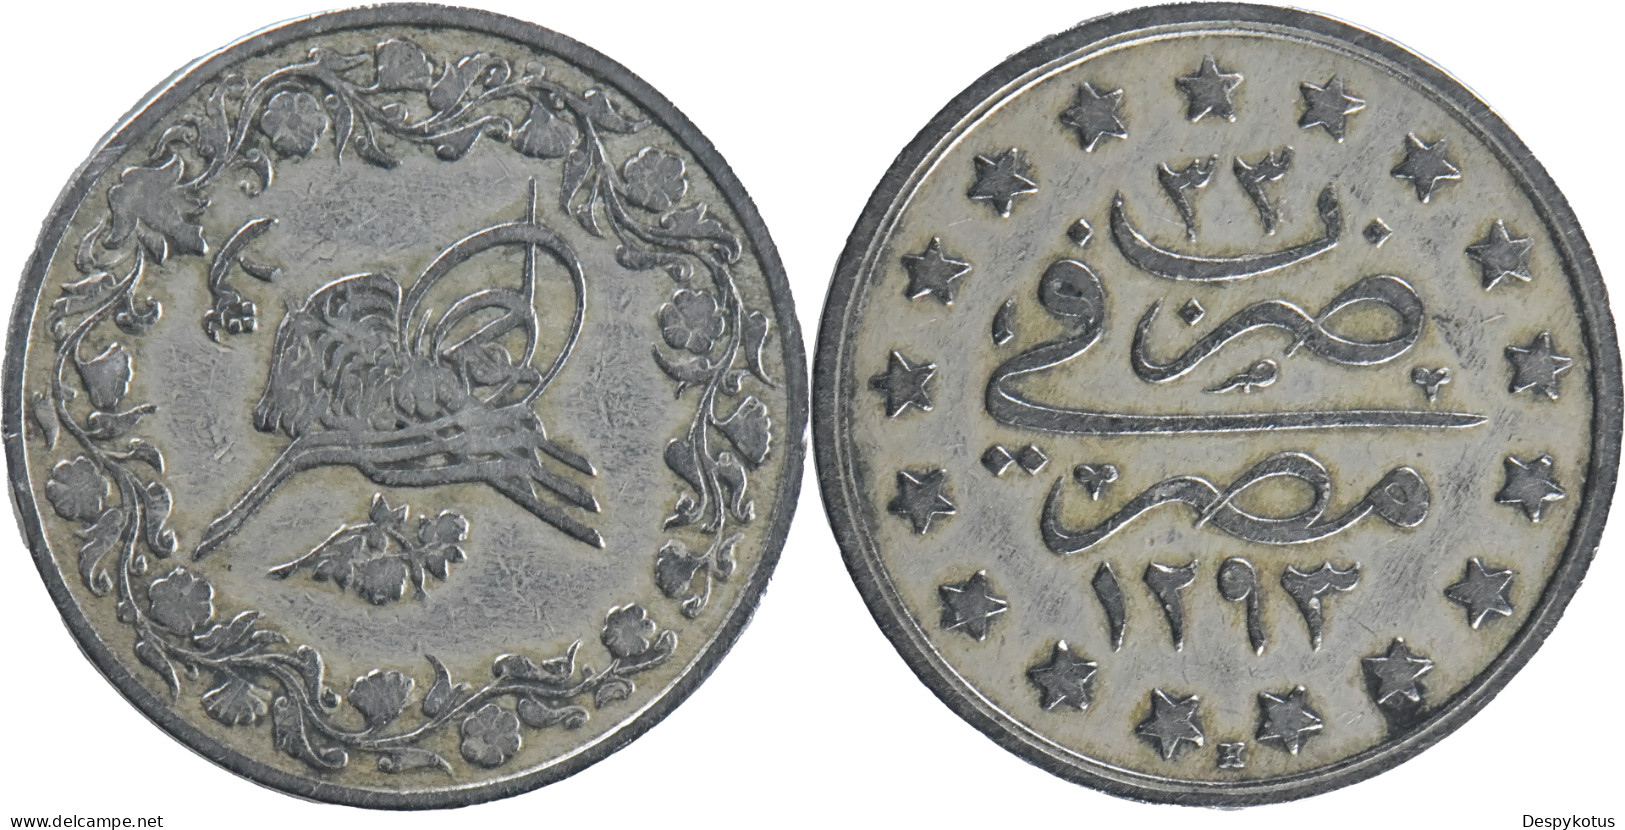 EGYPTE - 1293 (1896) - 1 Qirsh - Abdul Hamid II - 200 000 Ex. - 1896 - 20-016 - Egypt